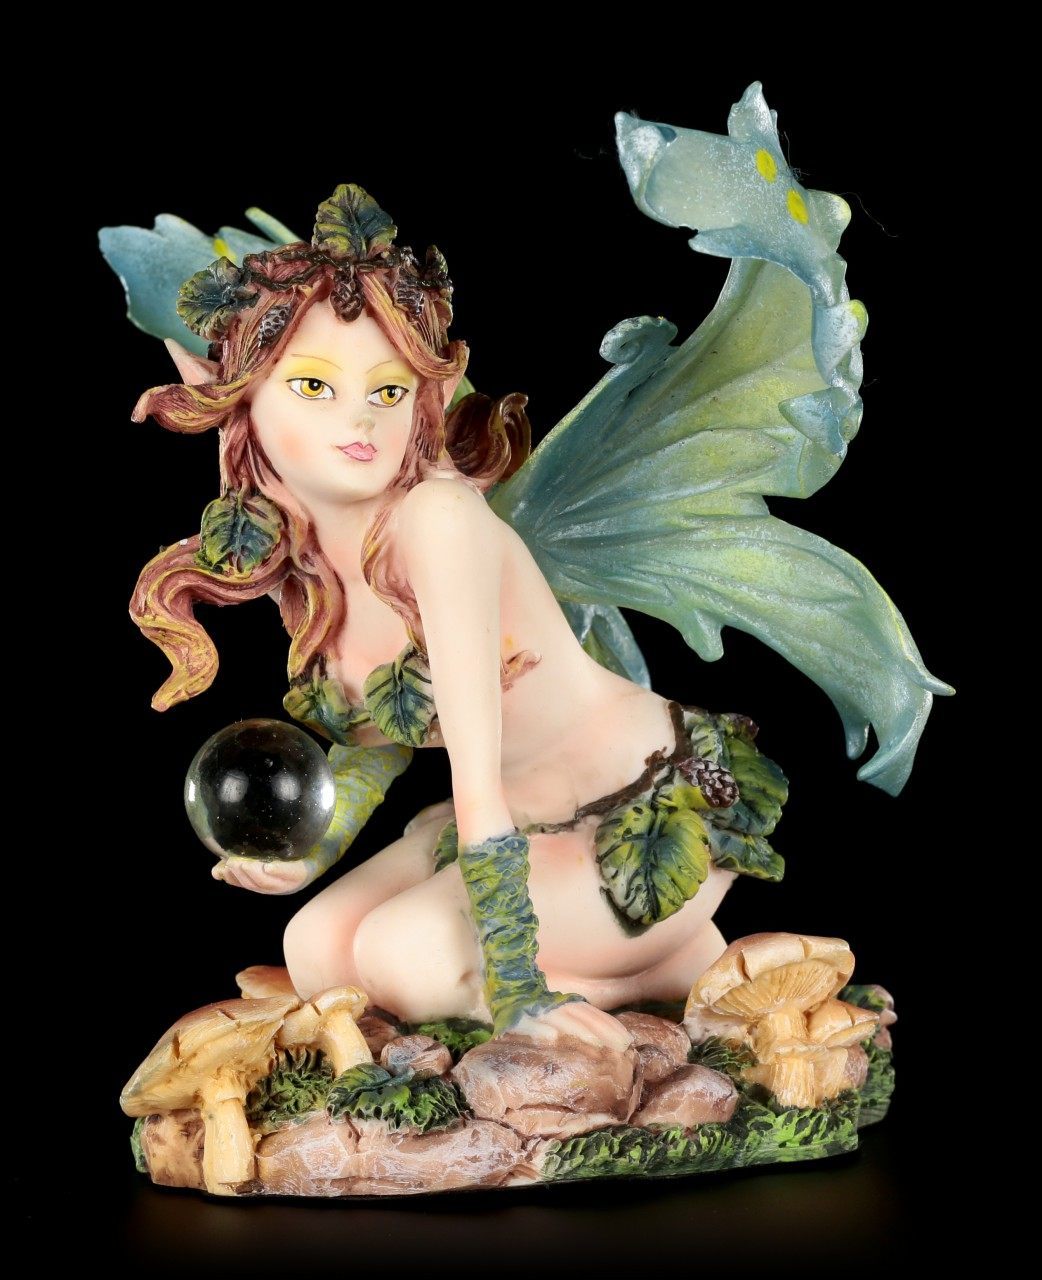 Green Fairy Figurine - Kildaresitting with Glassball